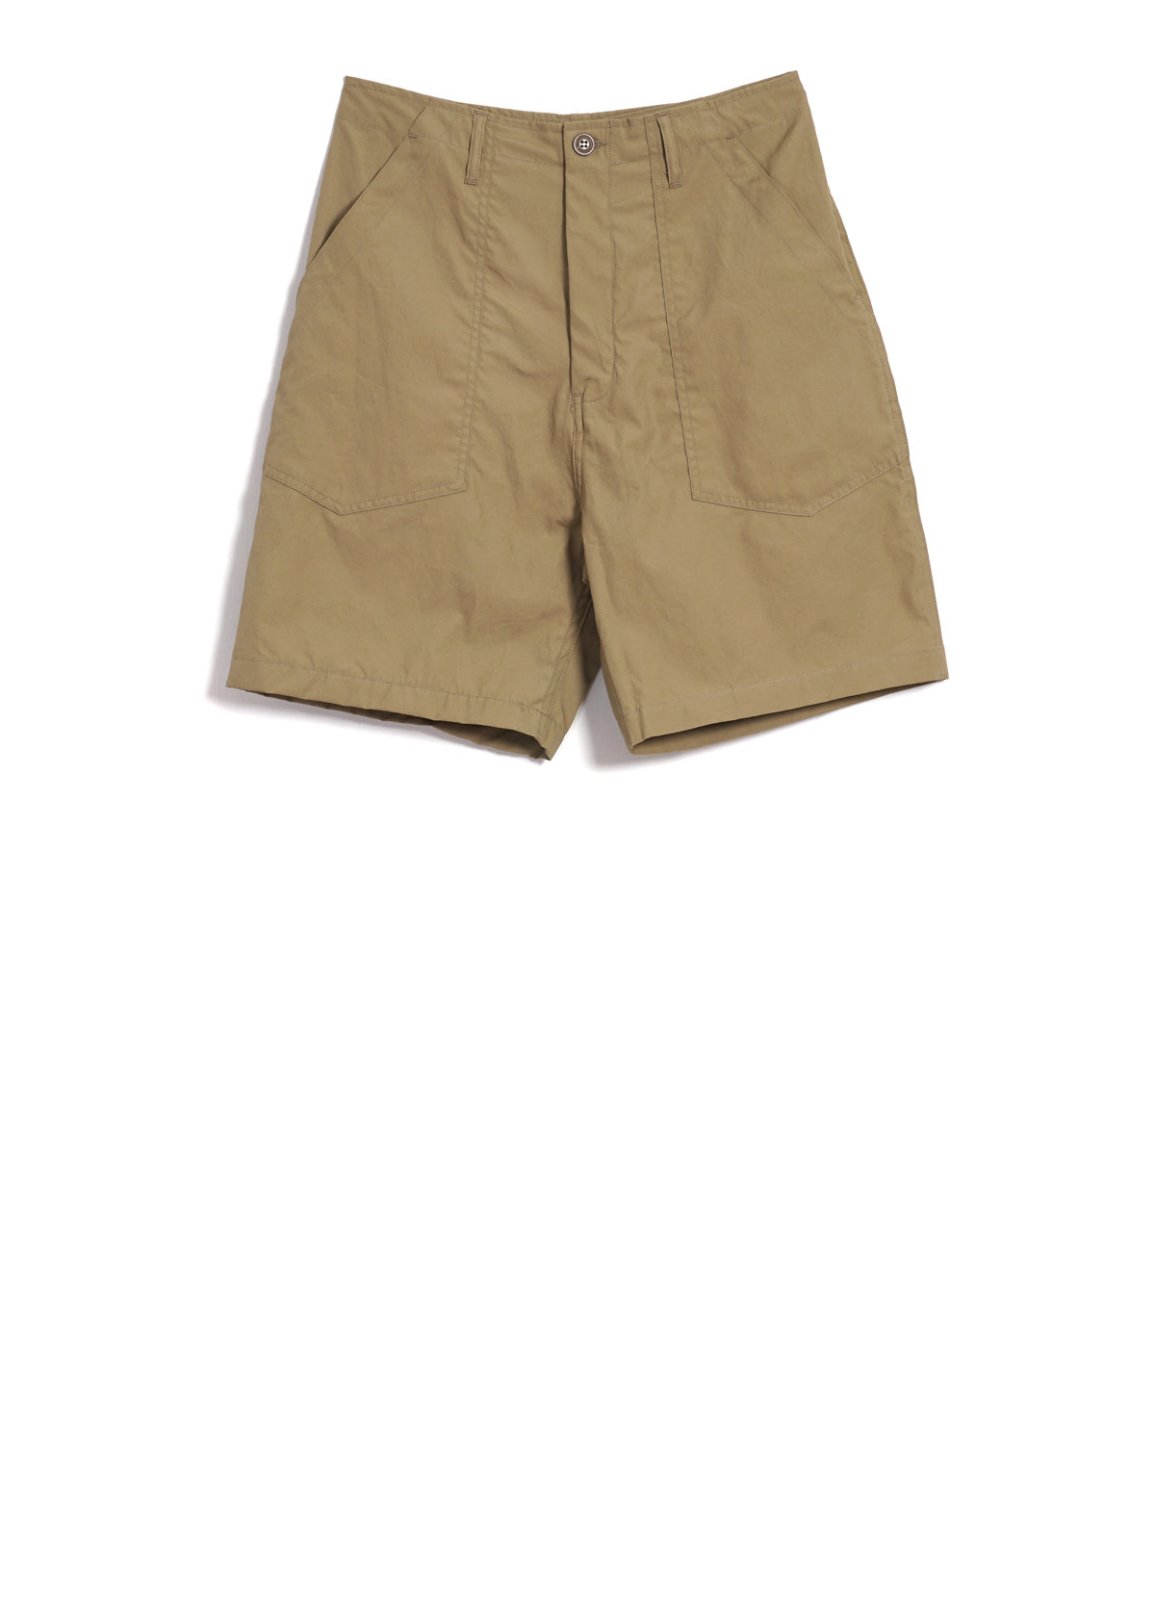 MONITALY - FATIGUE SHORTS | Large Patch Pocket Shorts | Khaki - HANSEN Garments